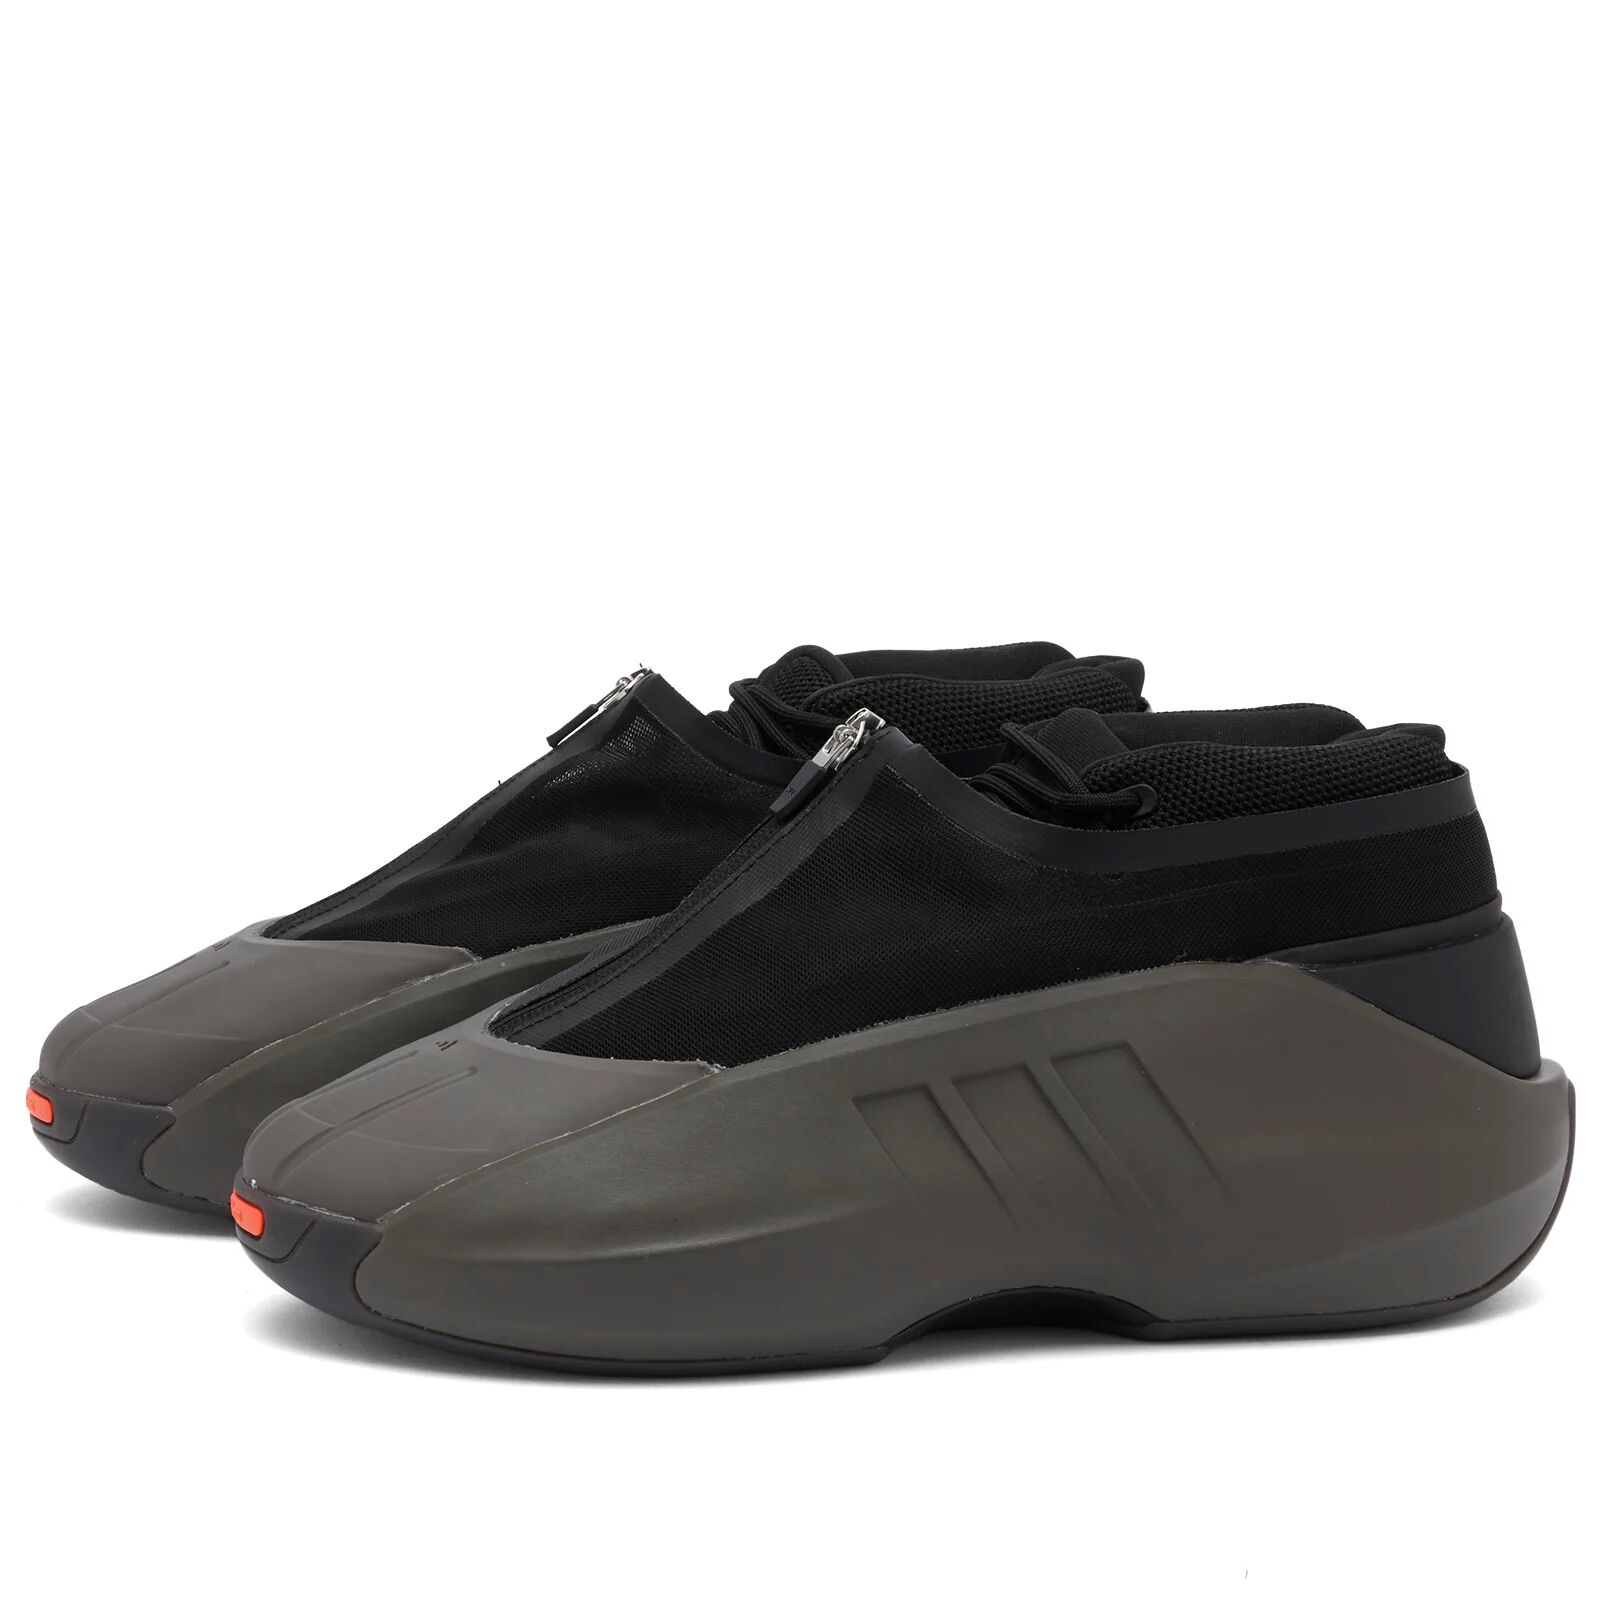 Adidas Men's Crazy IIInfinity Sneakers in Charcoal/Core Black/Solar Red, Size UK 8